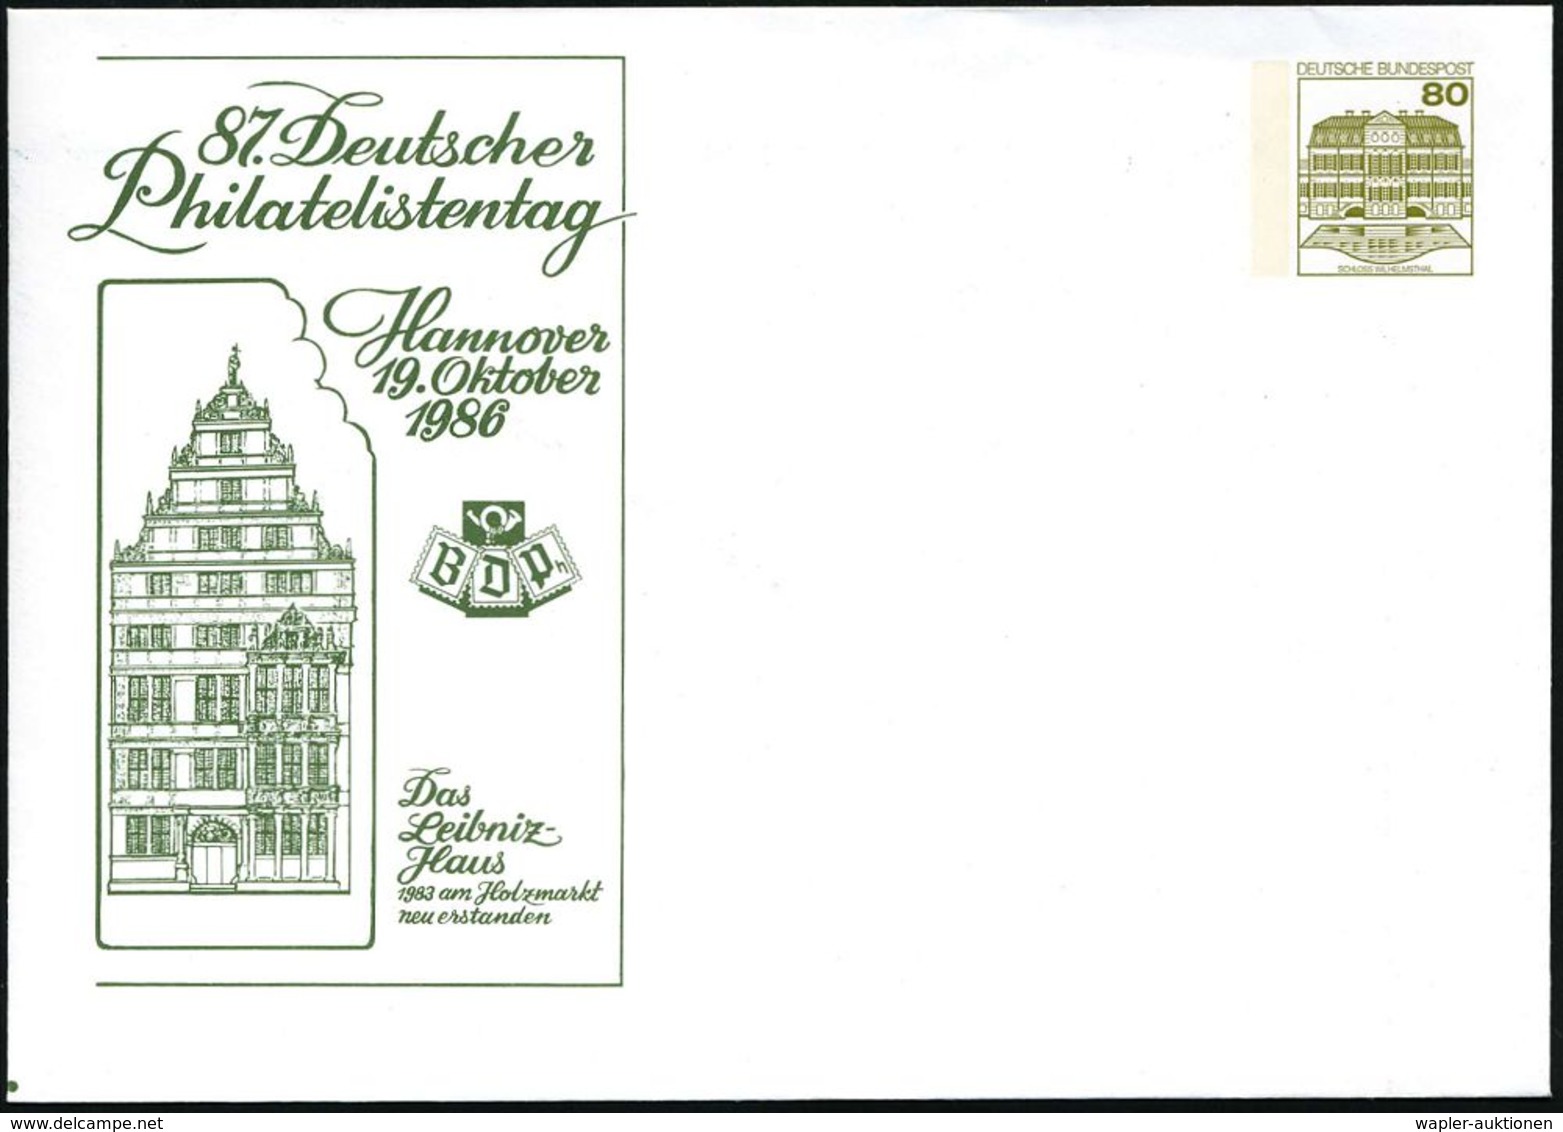 BERÜHMTE MATHEMATIKER : Hannover 1986 (19.10.) PU 80 Pf. Burgen; 87. Deutscher Philatel.Tag/ Das  L E I B N I T Z - Haus - Unclassified